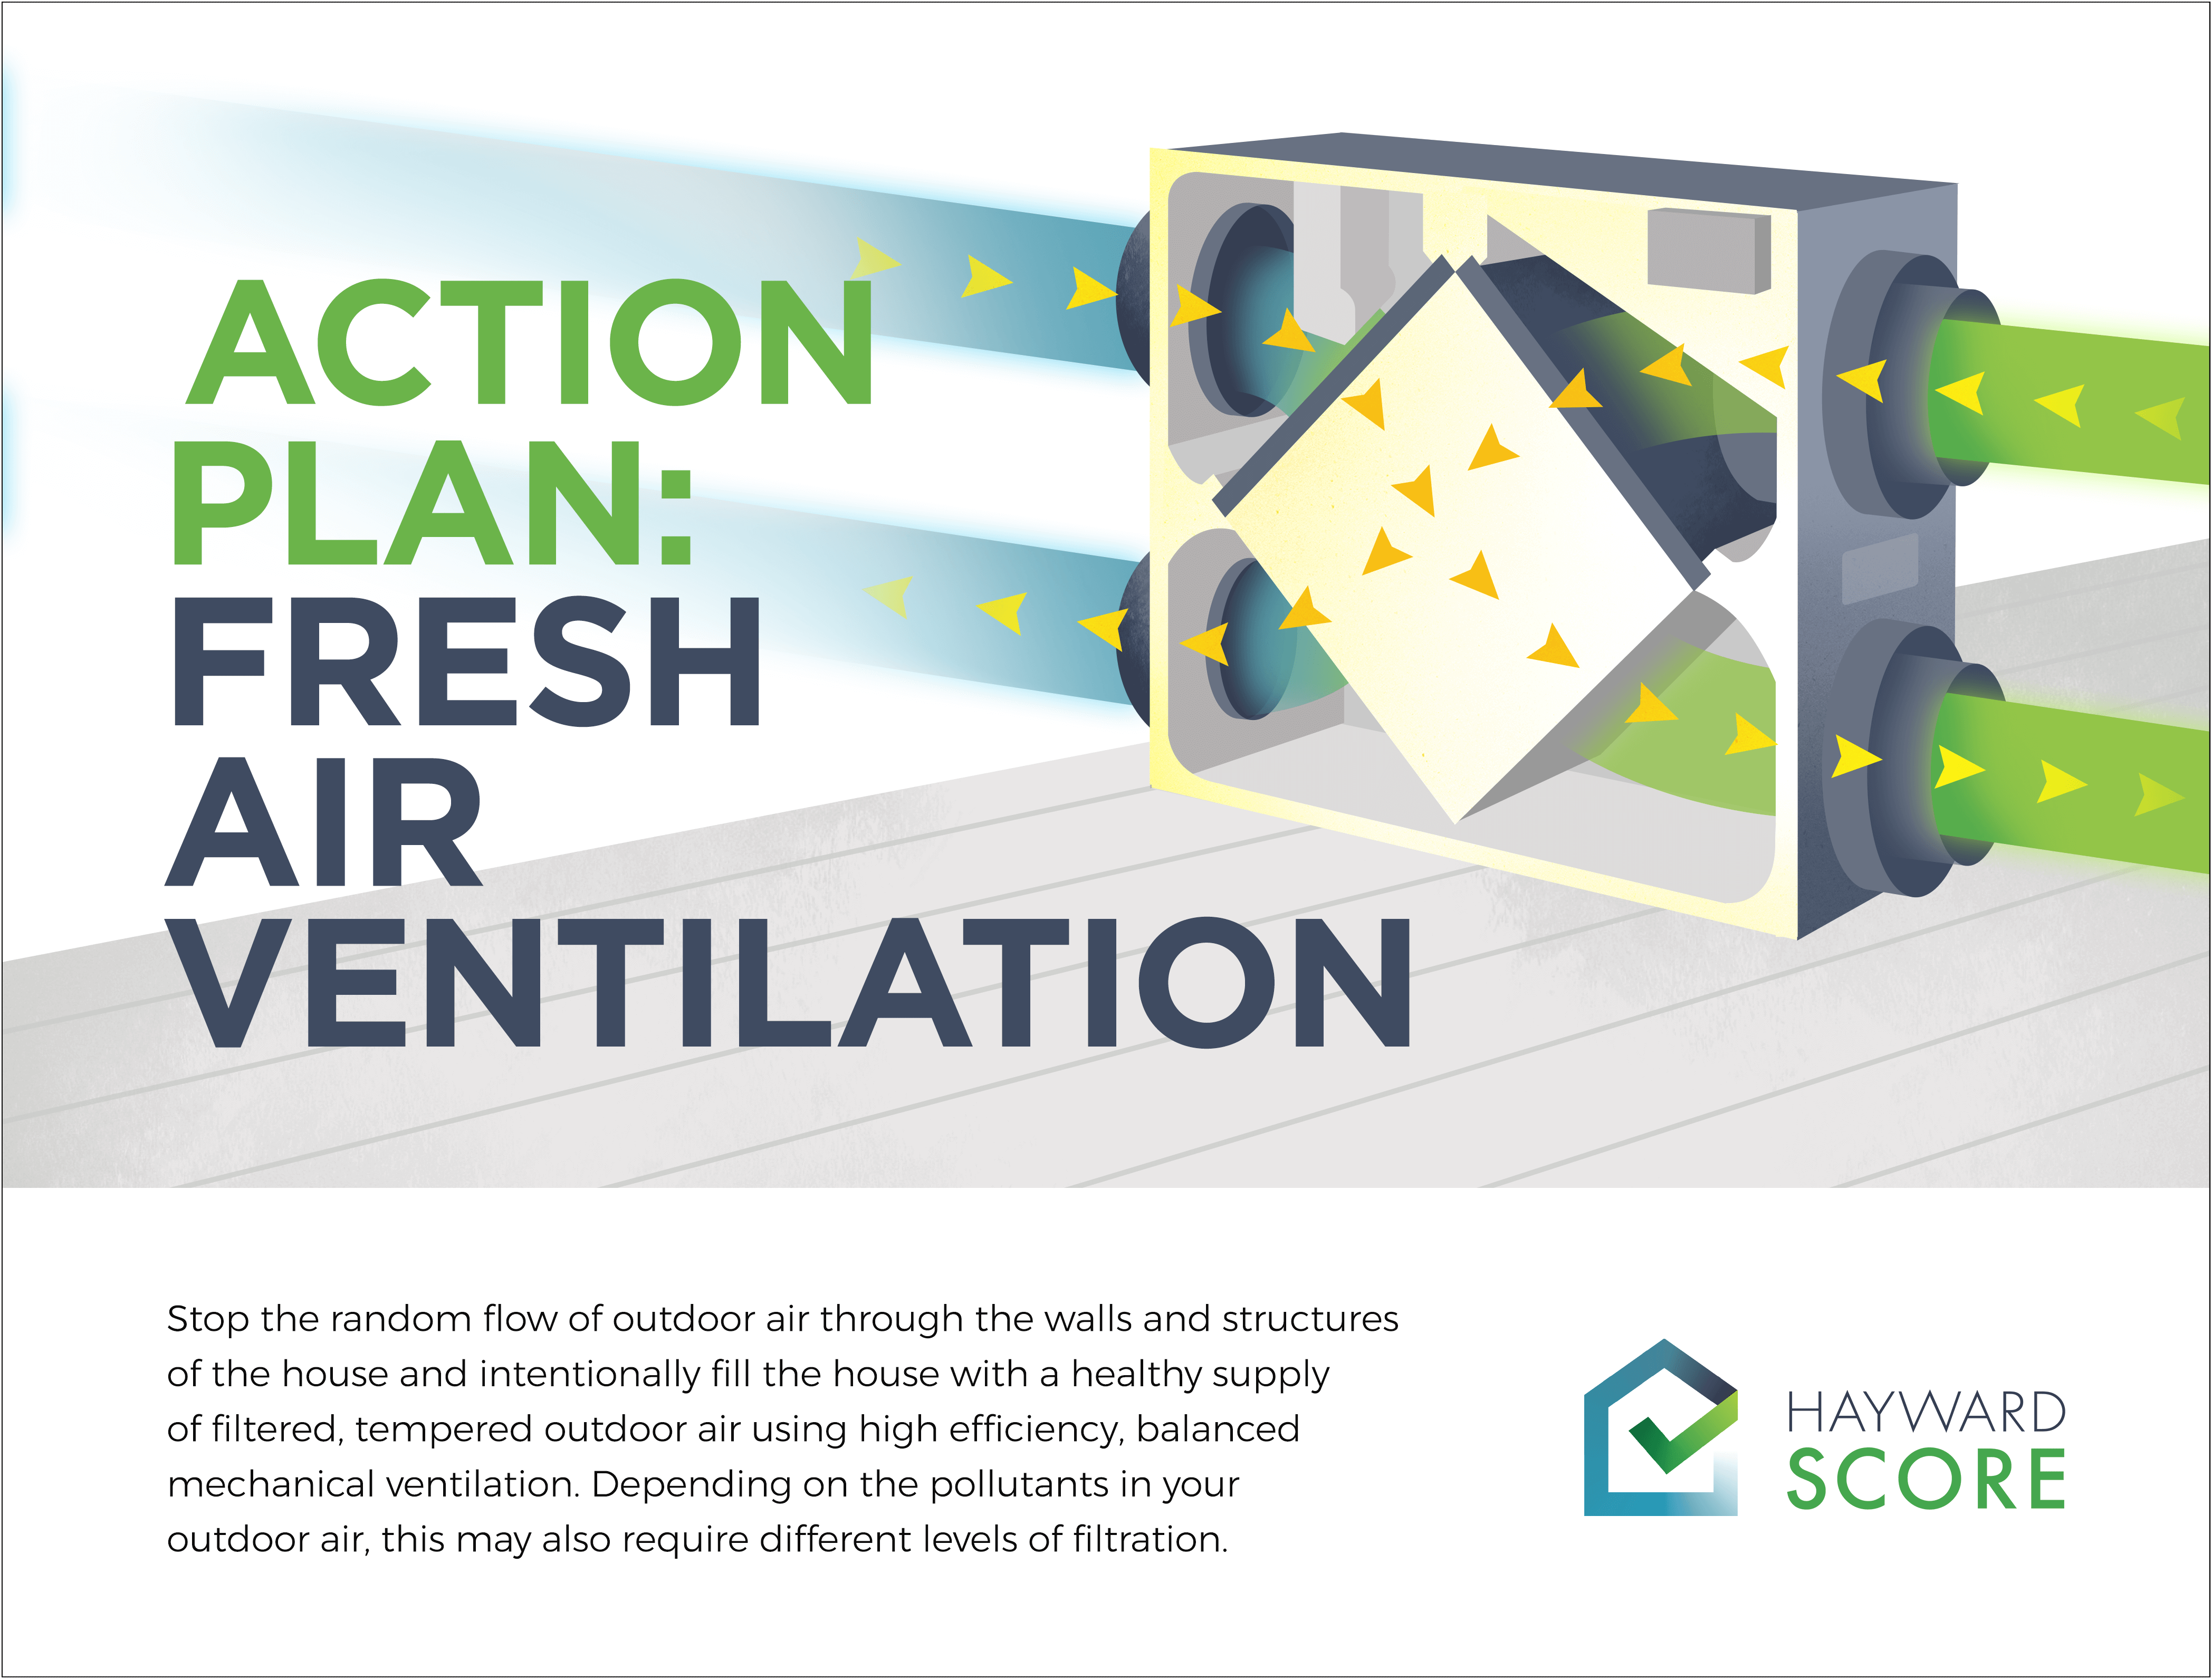 Action Plan: Fresh Air Ventilation